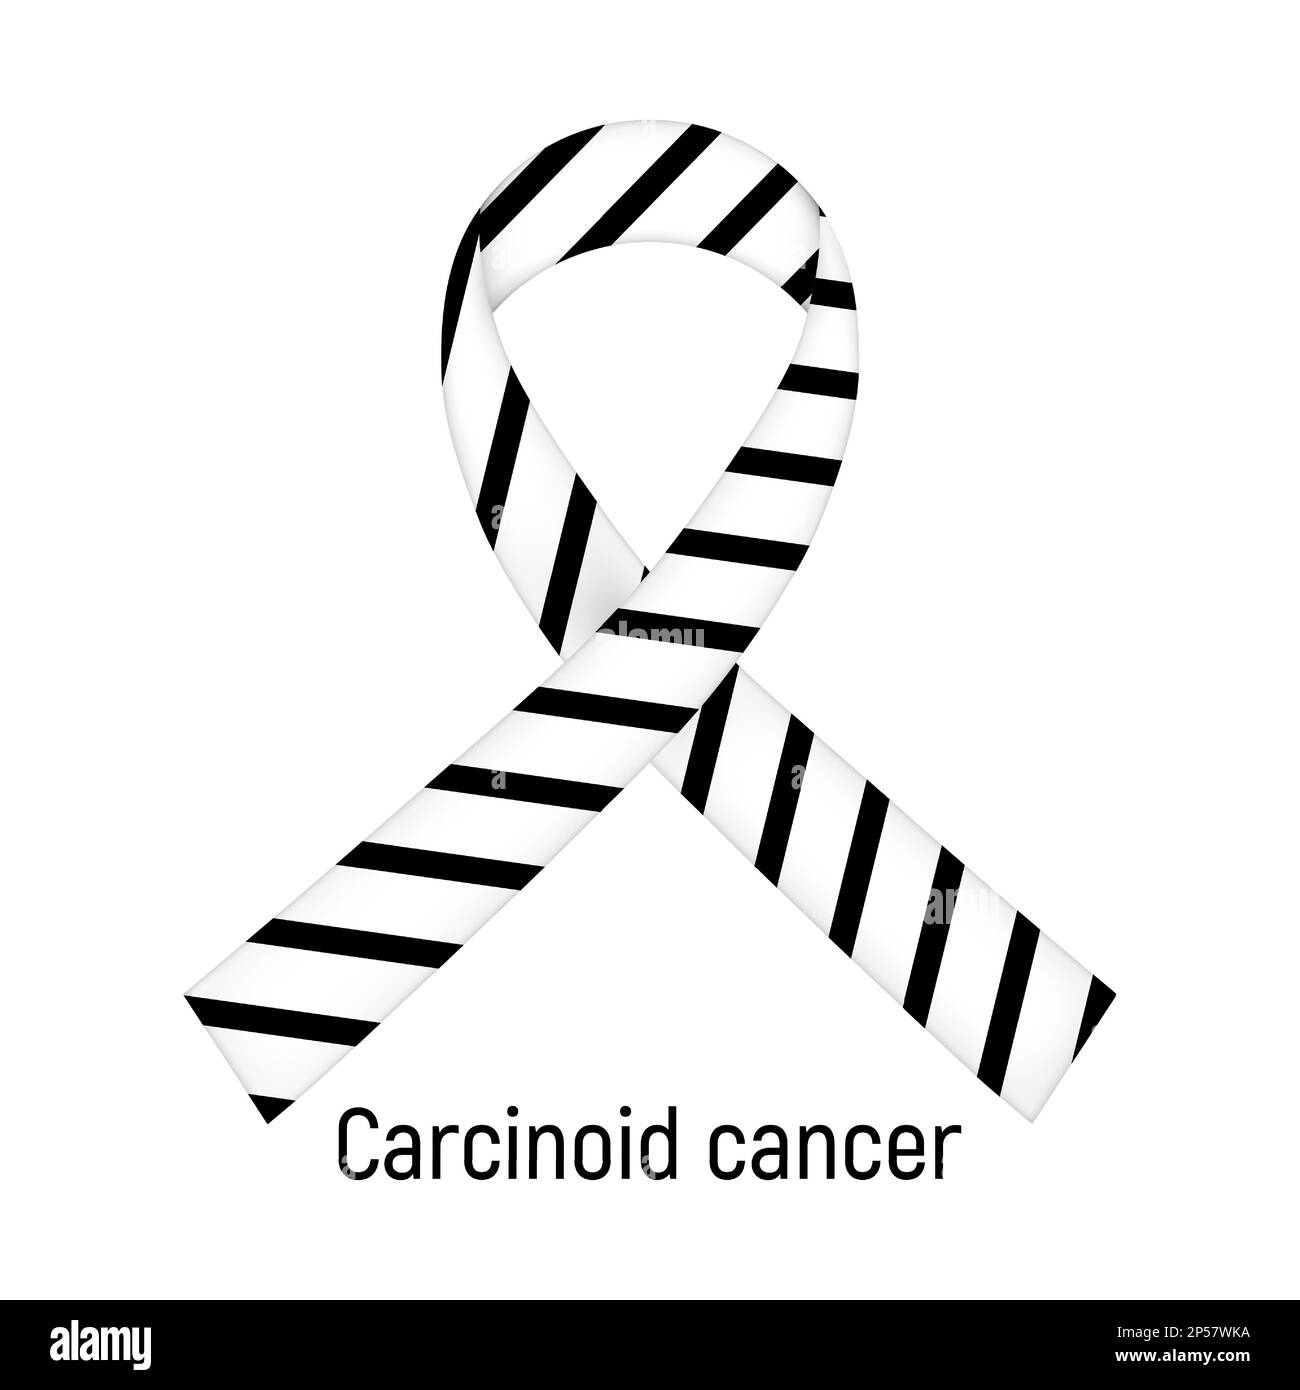 Cancer Ribbon. Carcinoid cancer. Vector illustration. Stock Vector